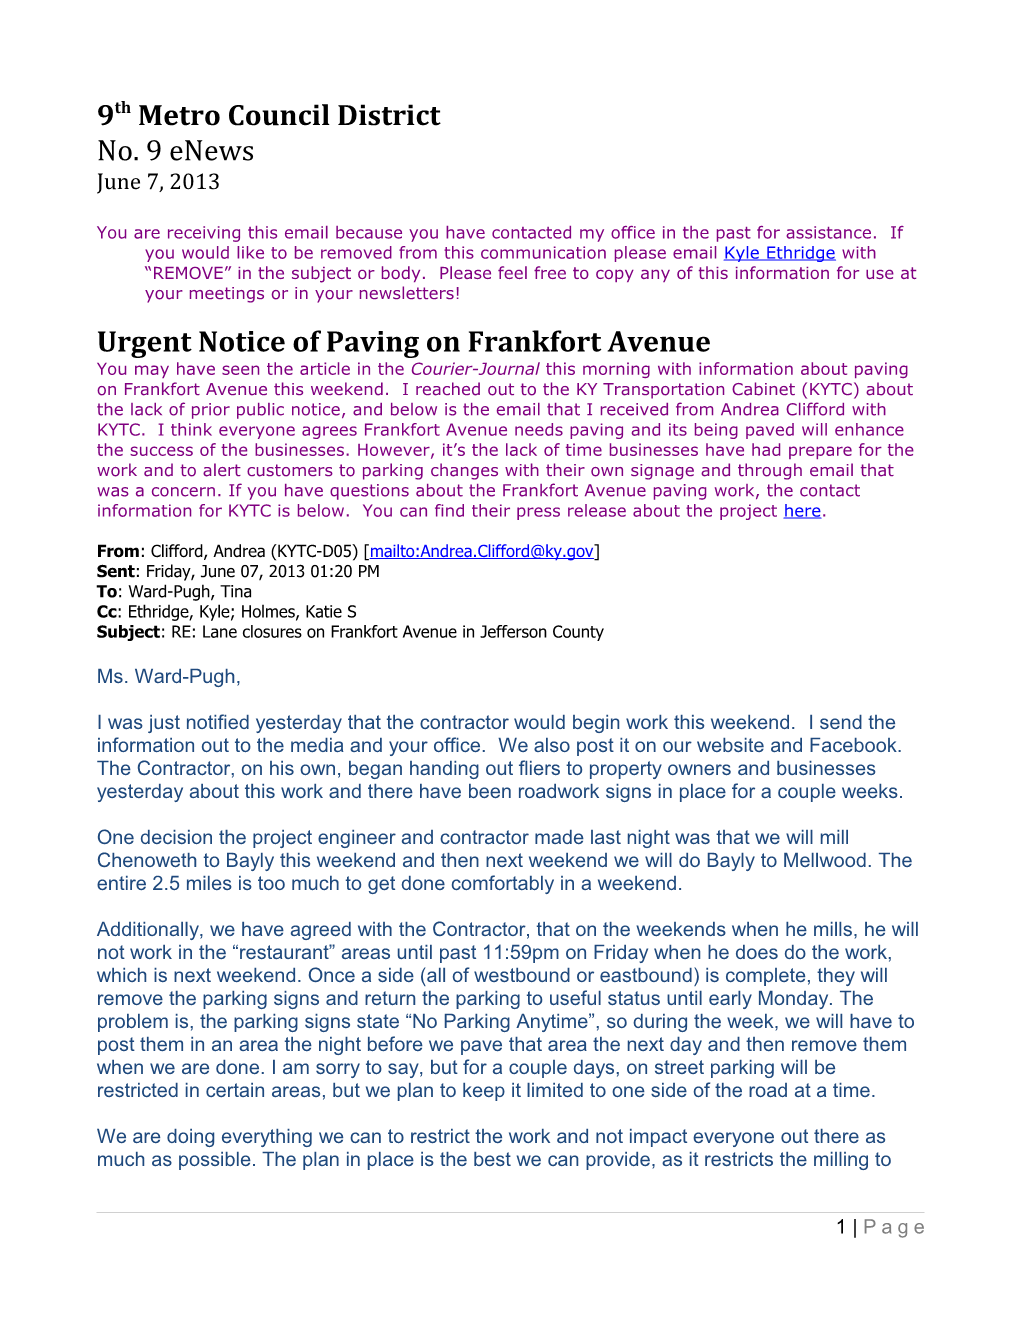 Urgent Notice of Paving on Frankfort Avenue